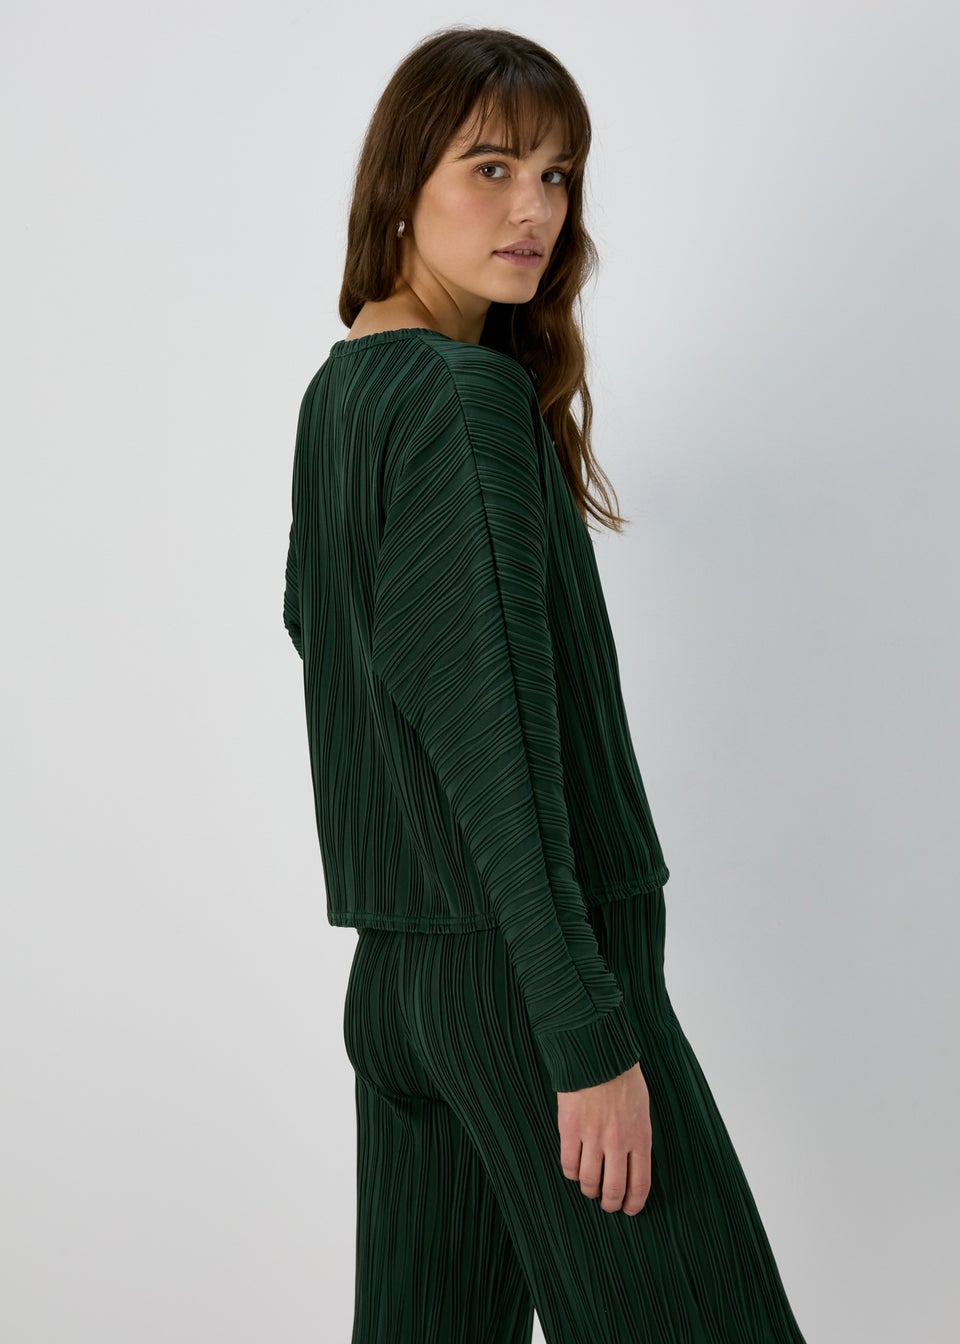 Green Textured Long Sleeve Top